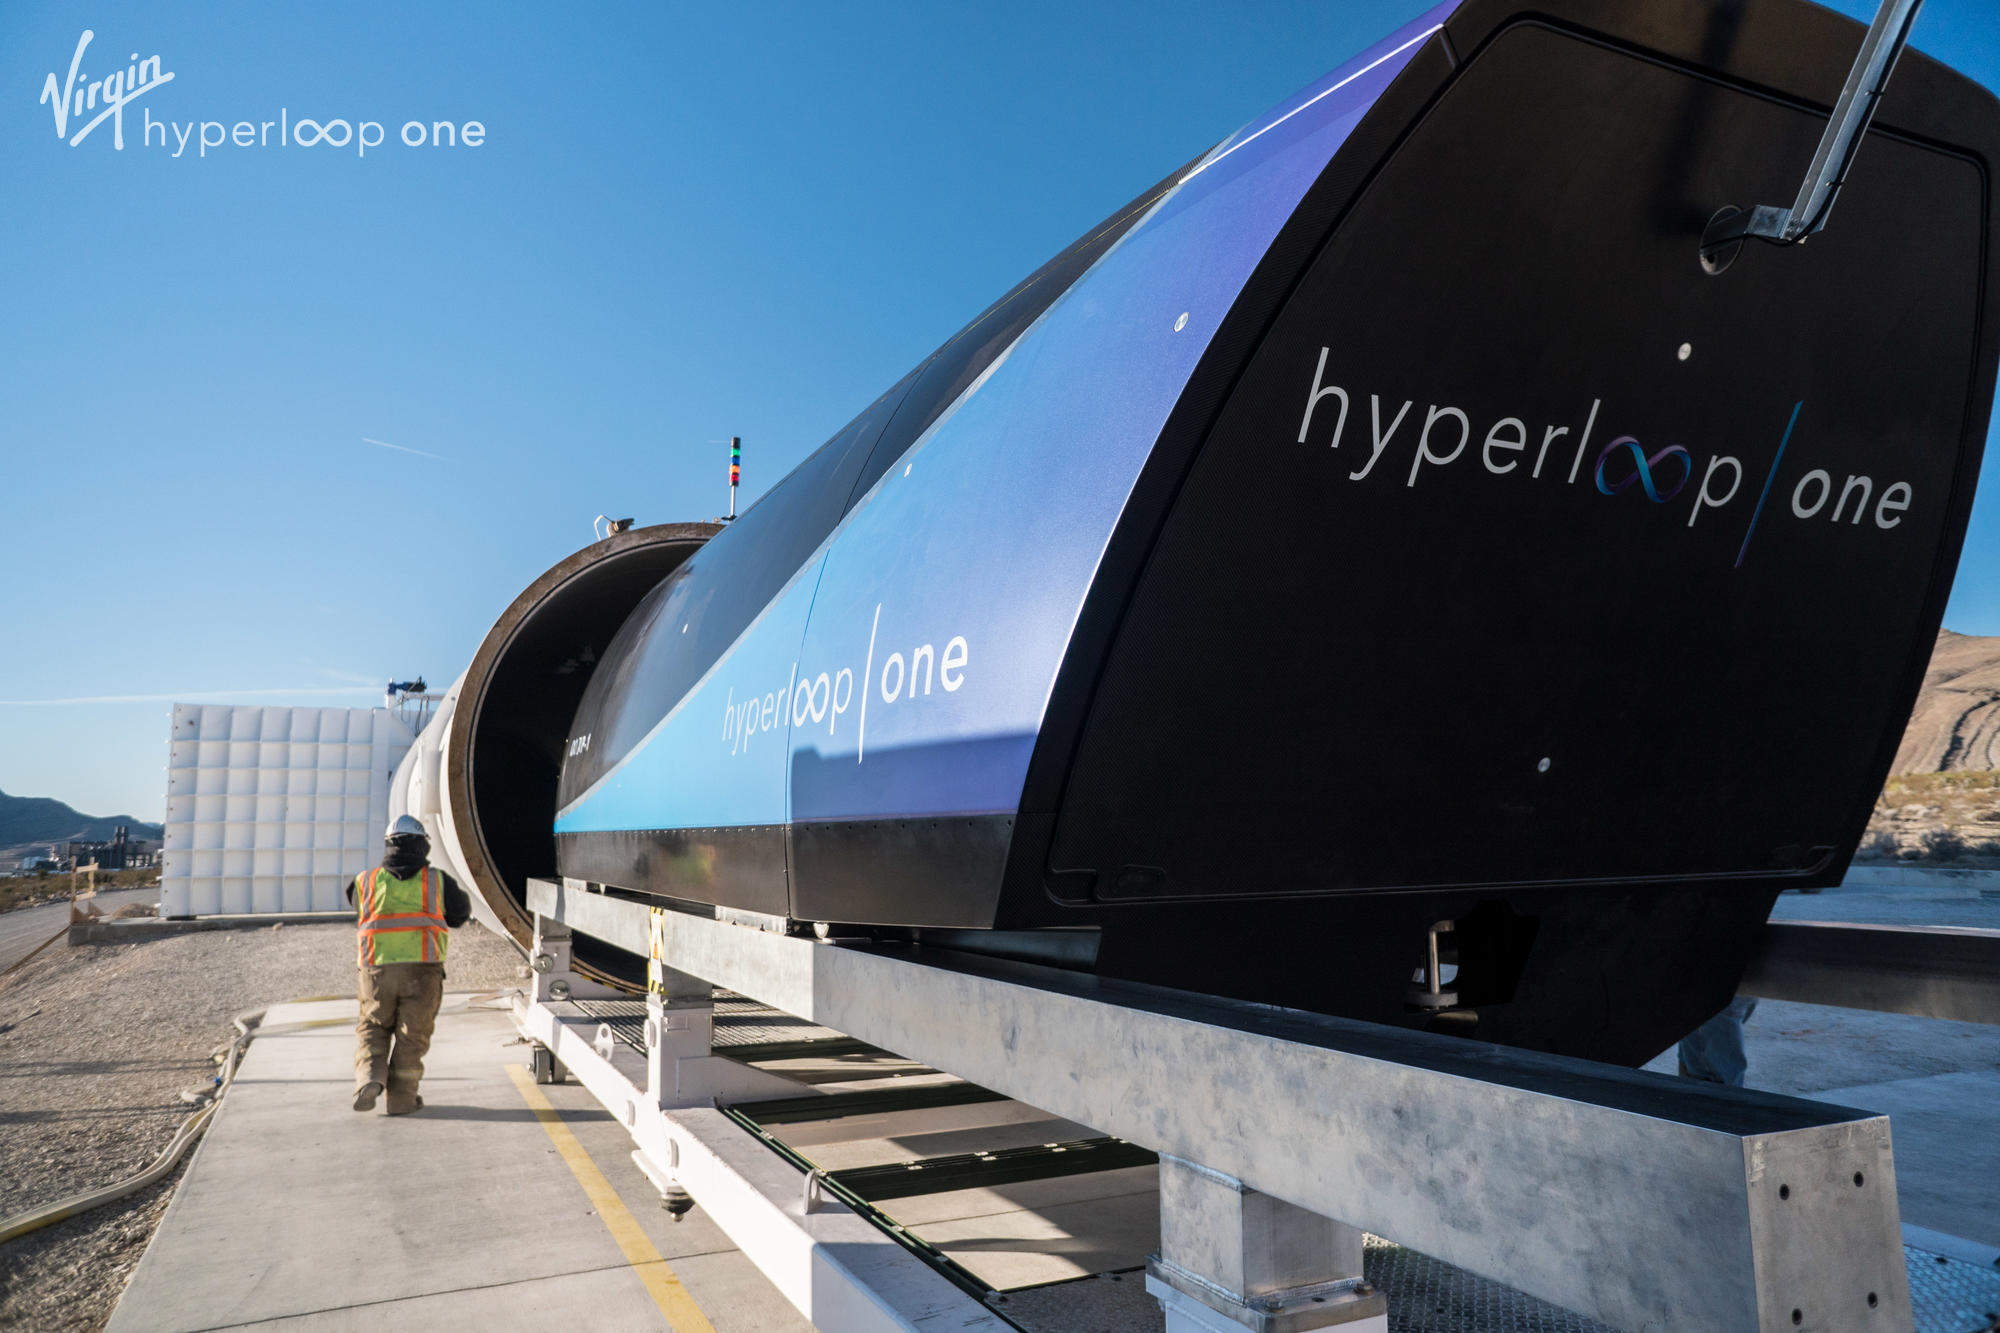 Virgin-Hyperloop